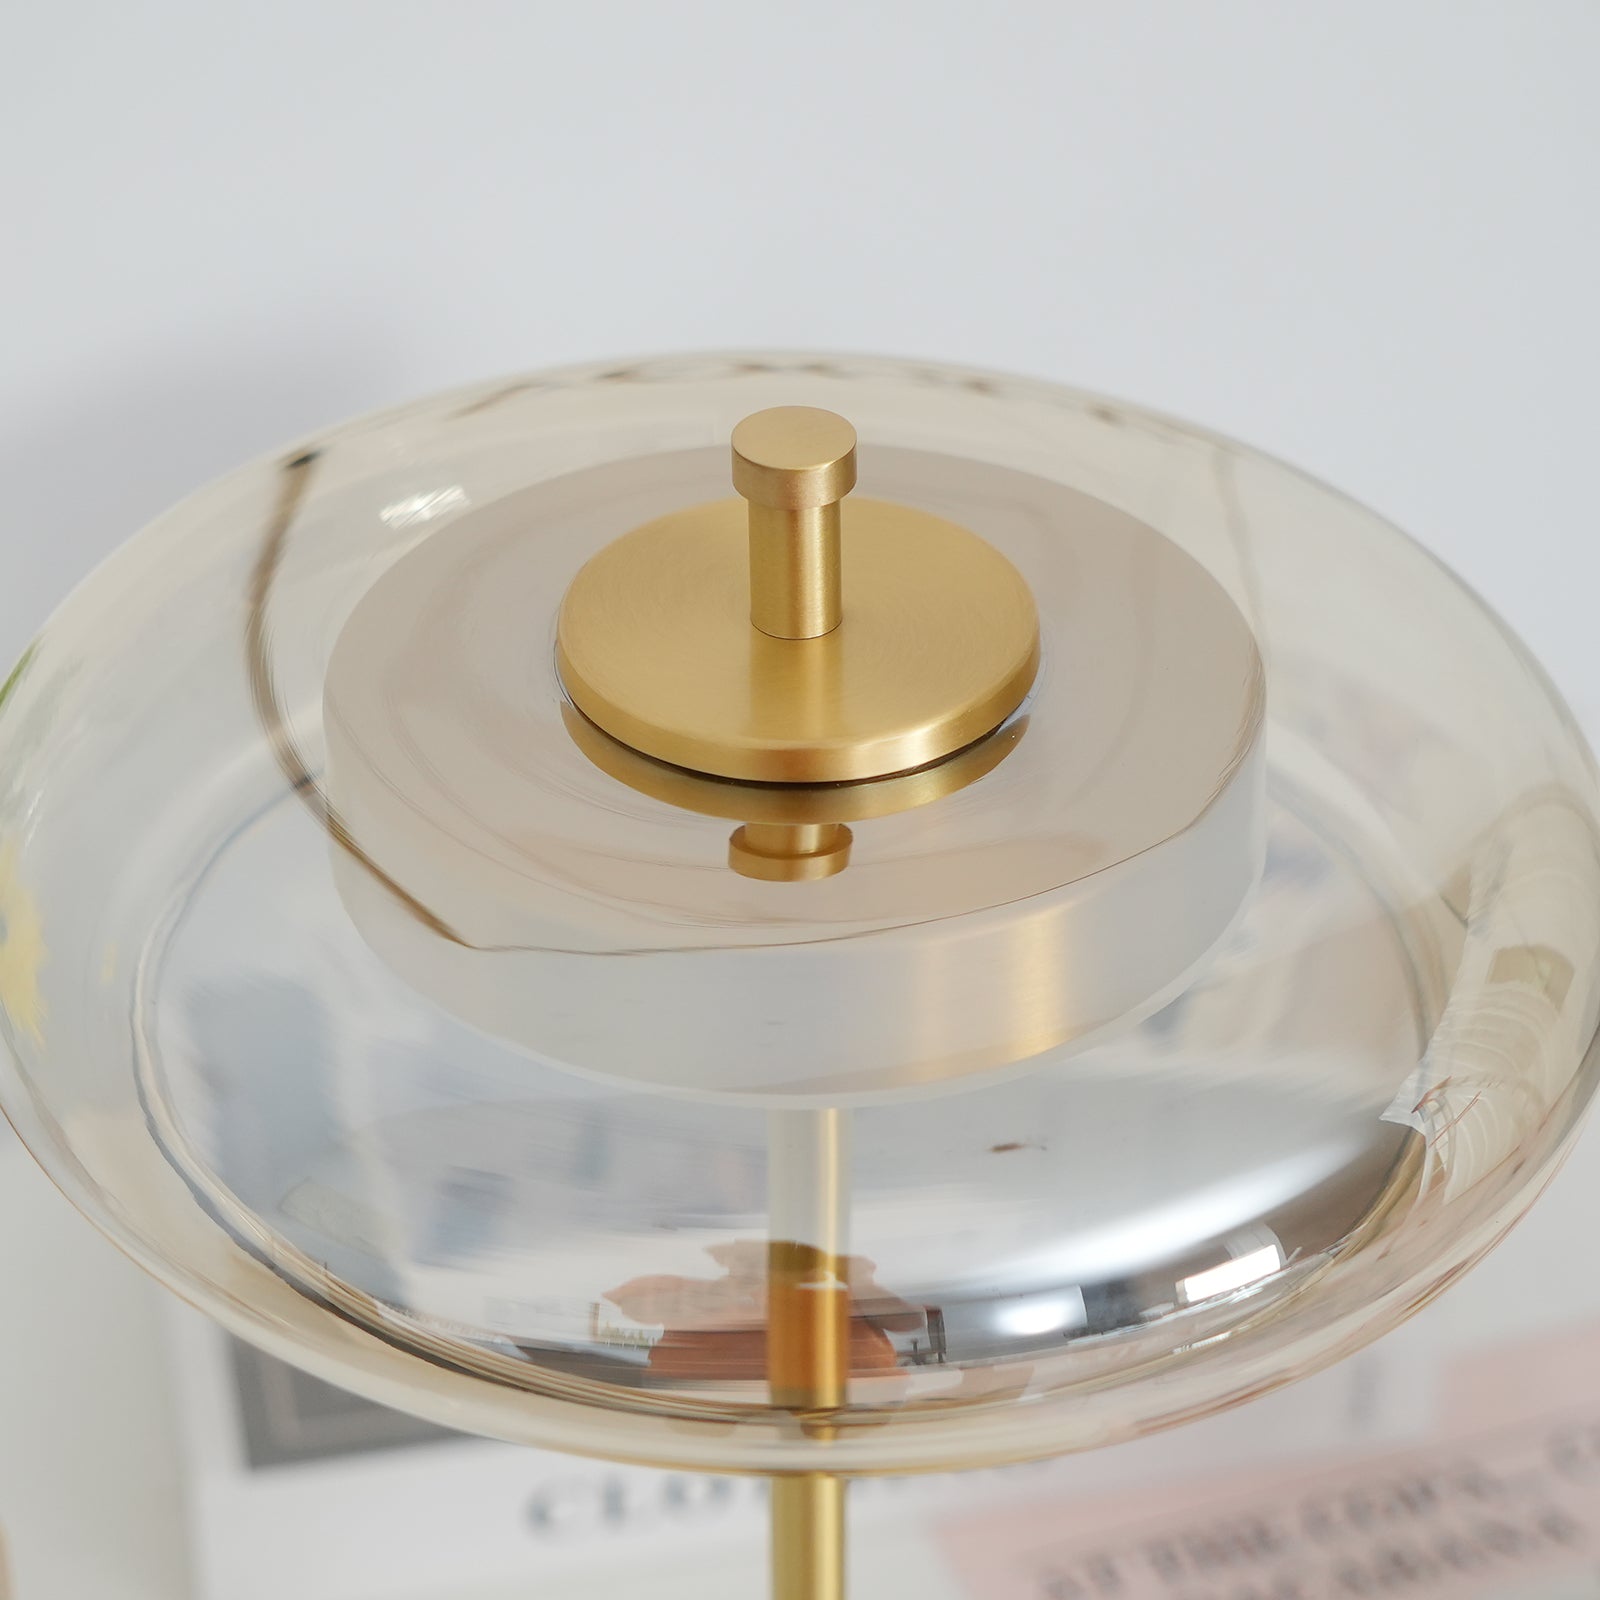 Redondo Table Lamp 8.6″- 17.5″